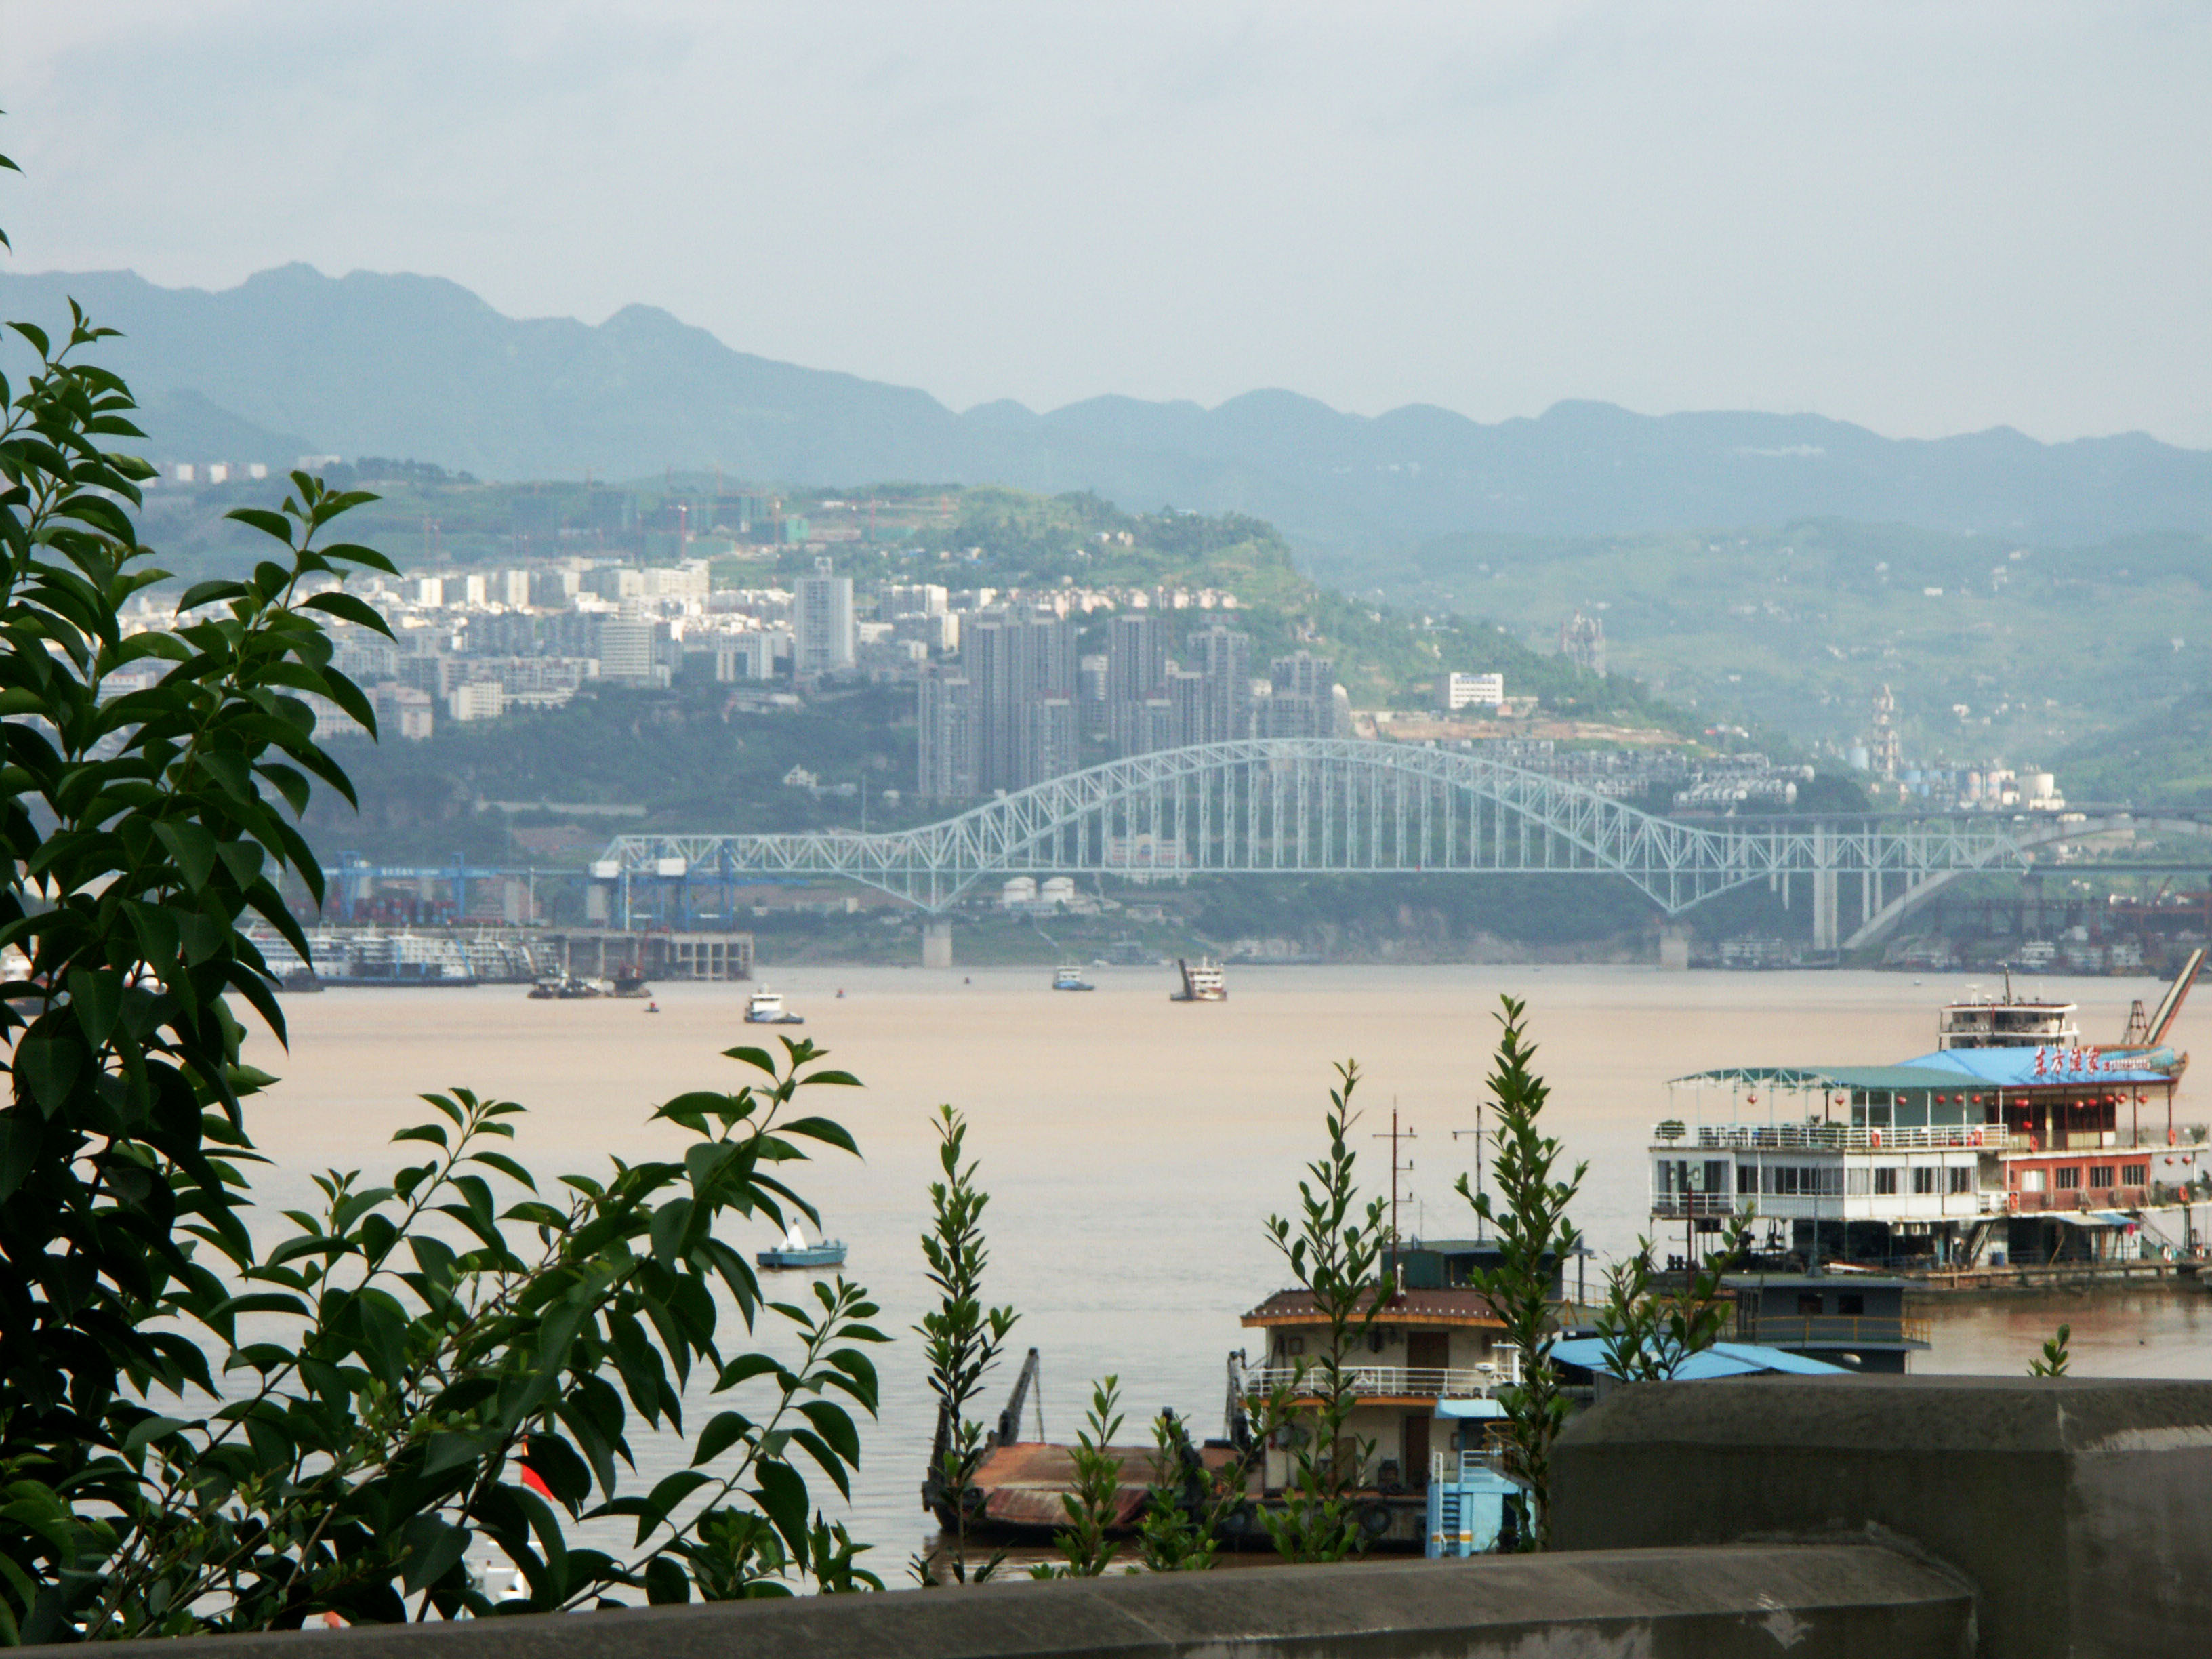 WanzhouRailway&Harbor.jpg